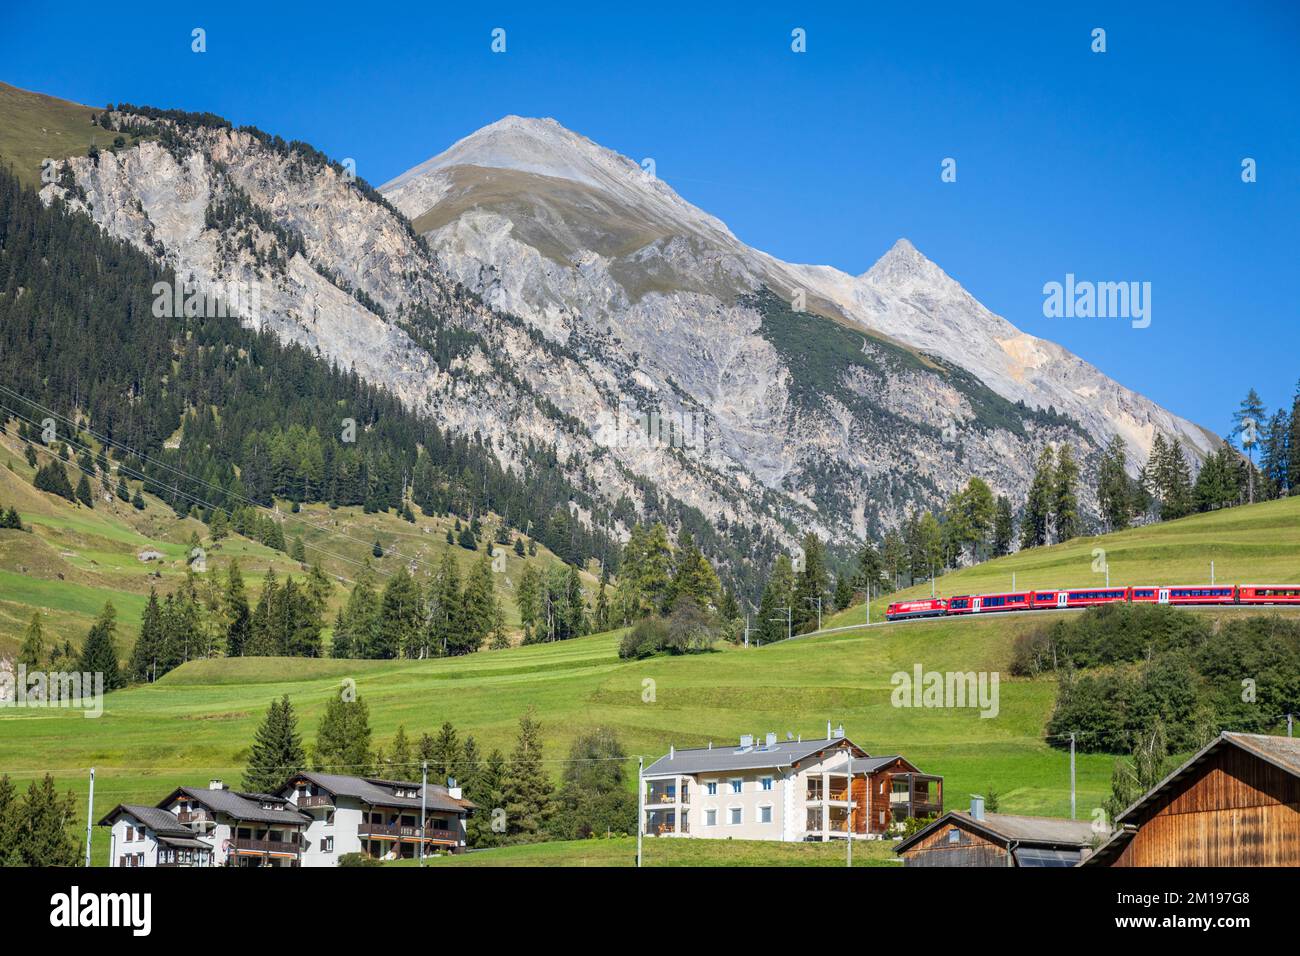 Red Train and Preda village in the Swiss Alps, Switzerland Stock Photo